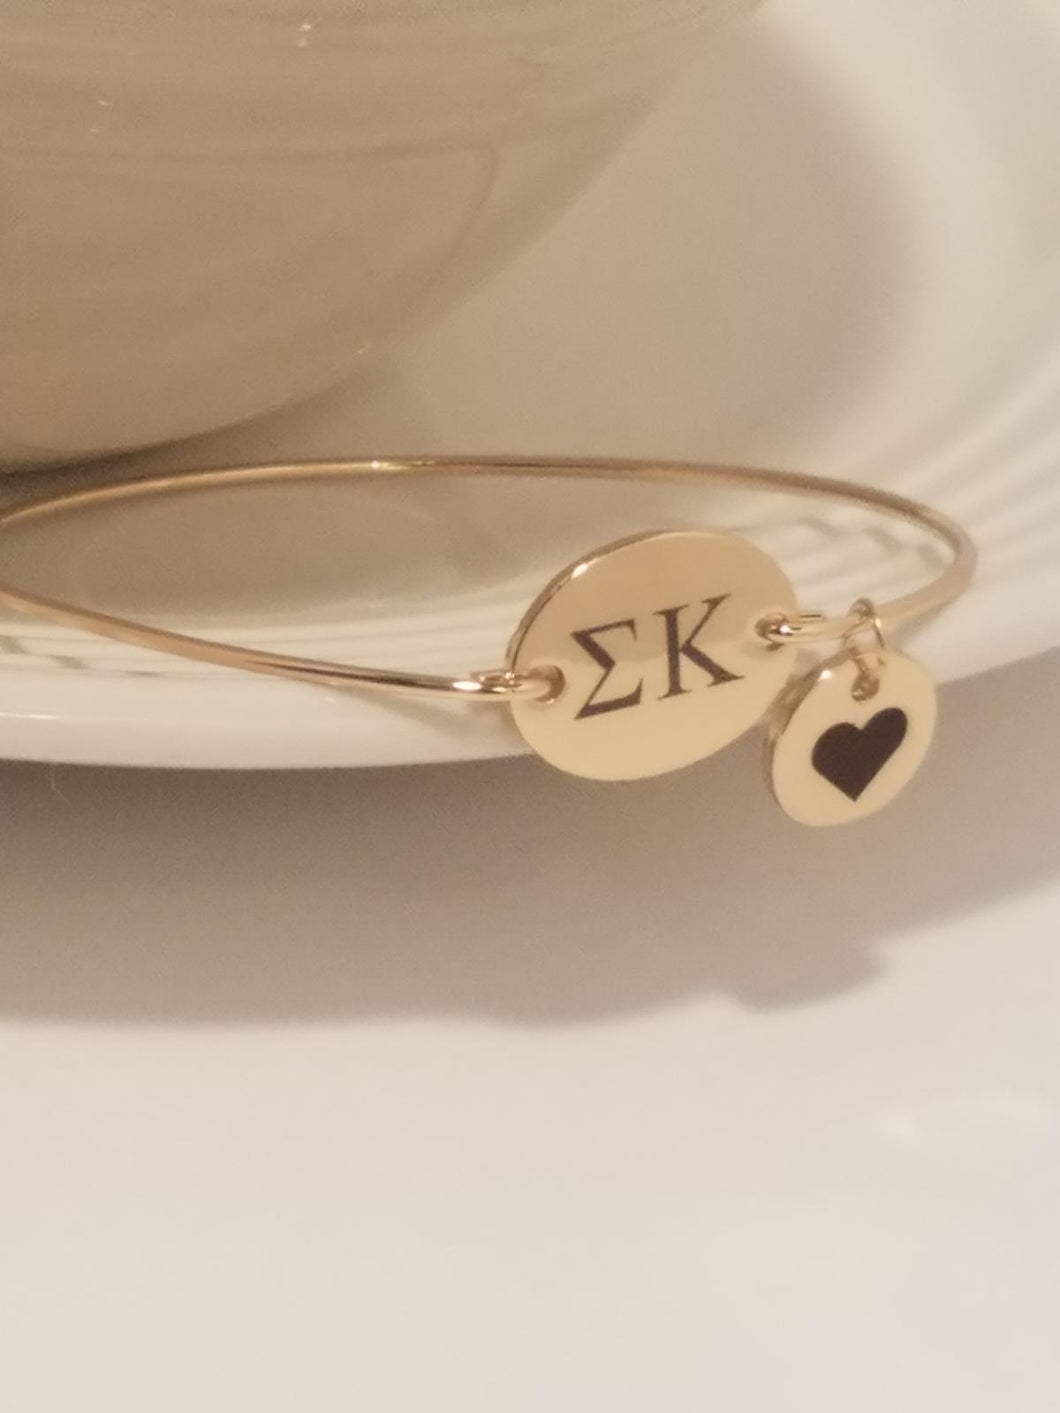 Sigma Kappa Bangle Bracelet Charm Sorority